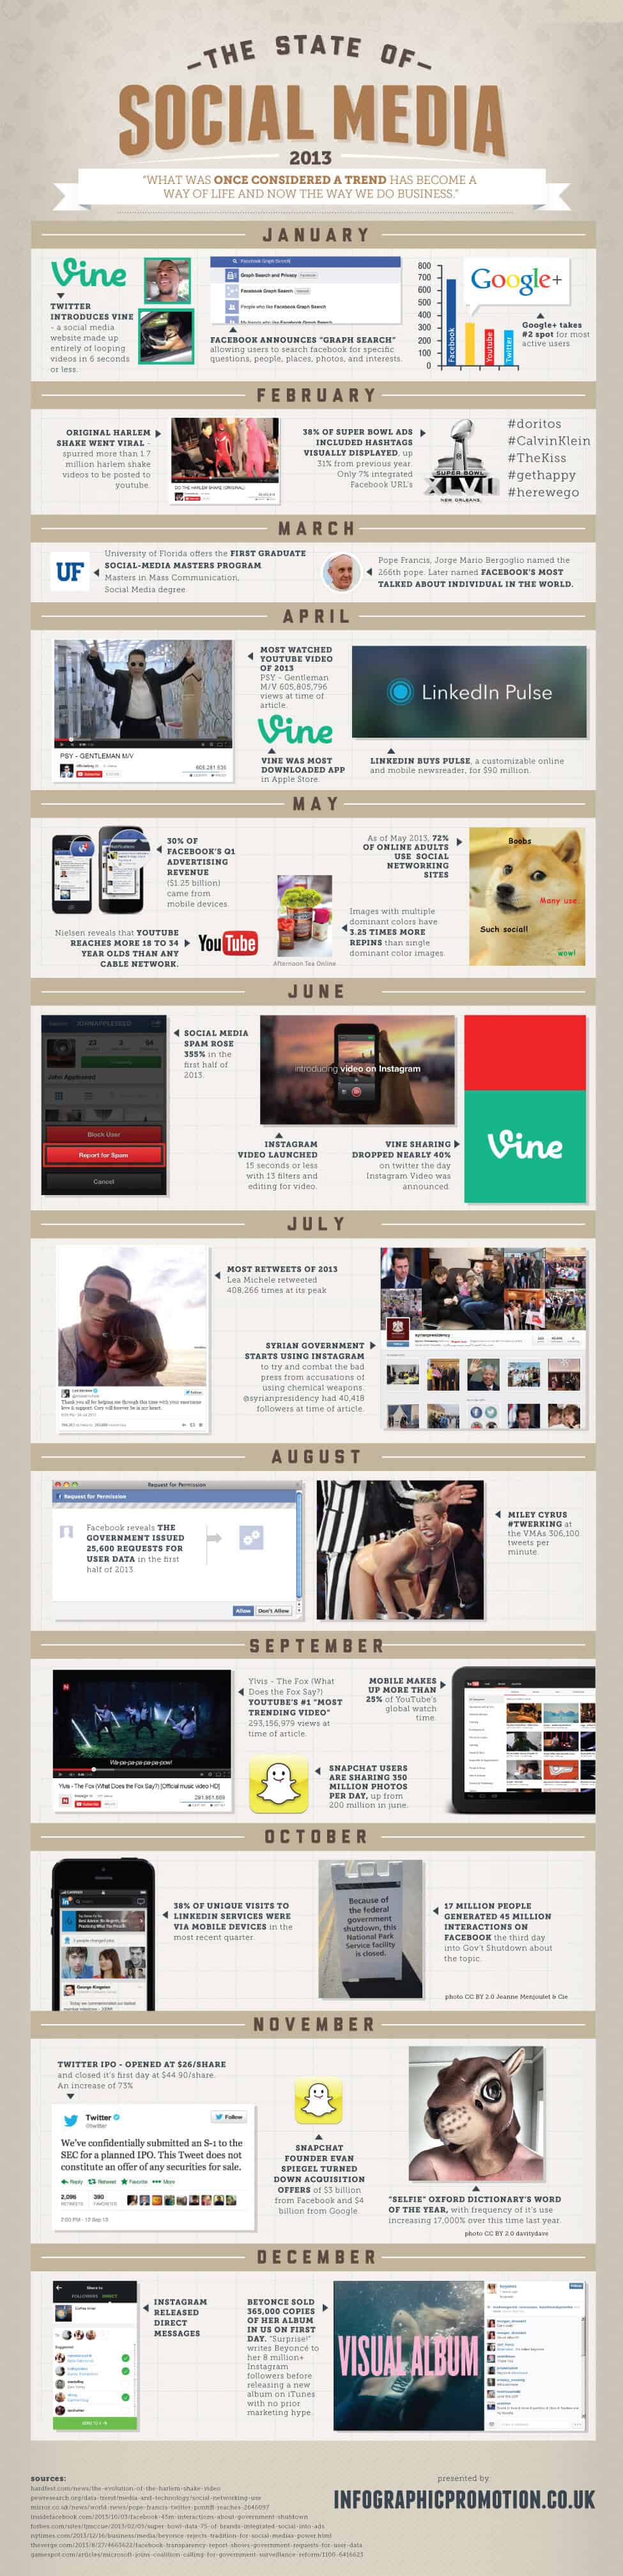 The State of Social Media 2013. MavSocial